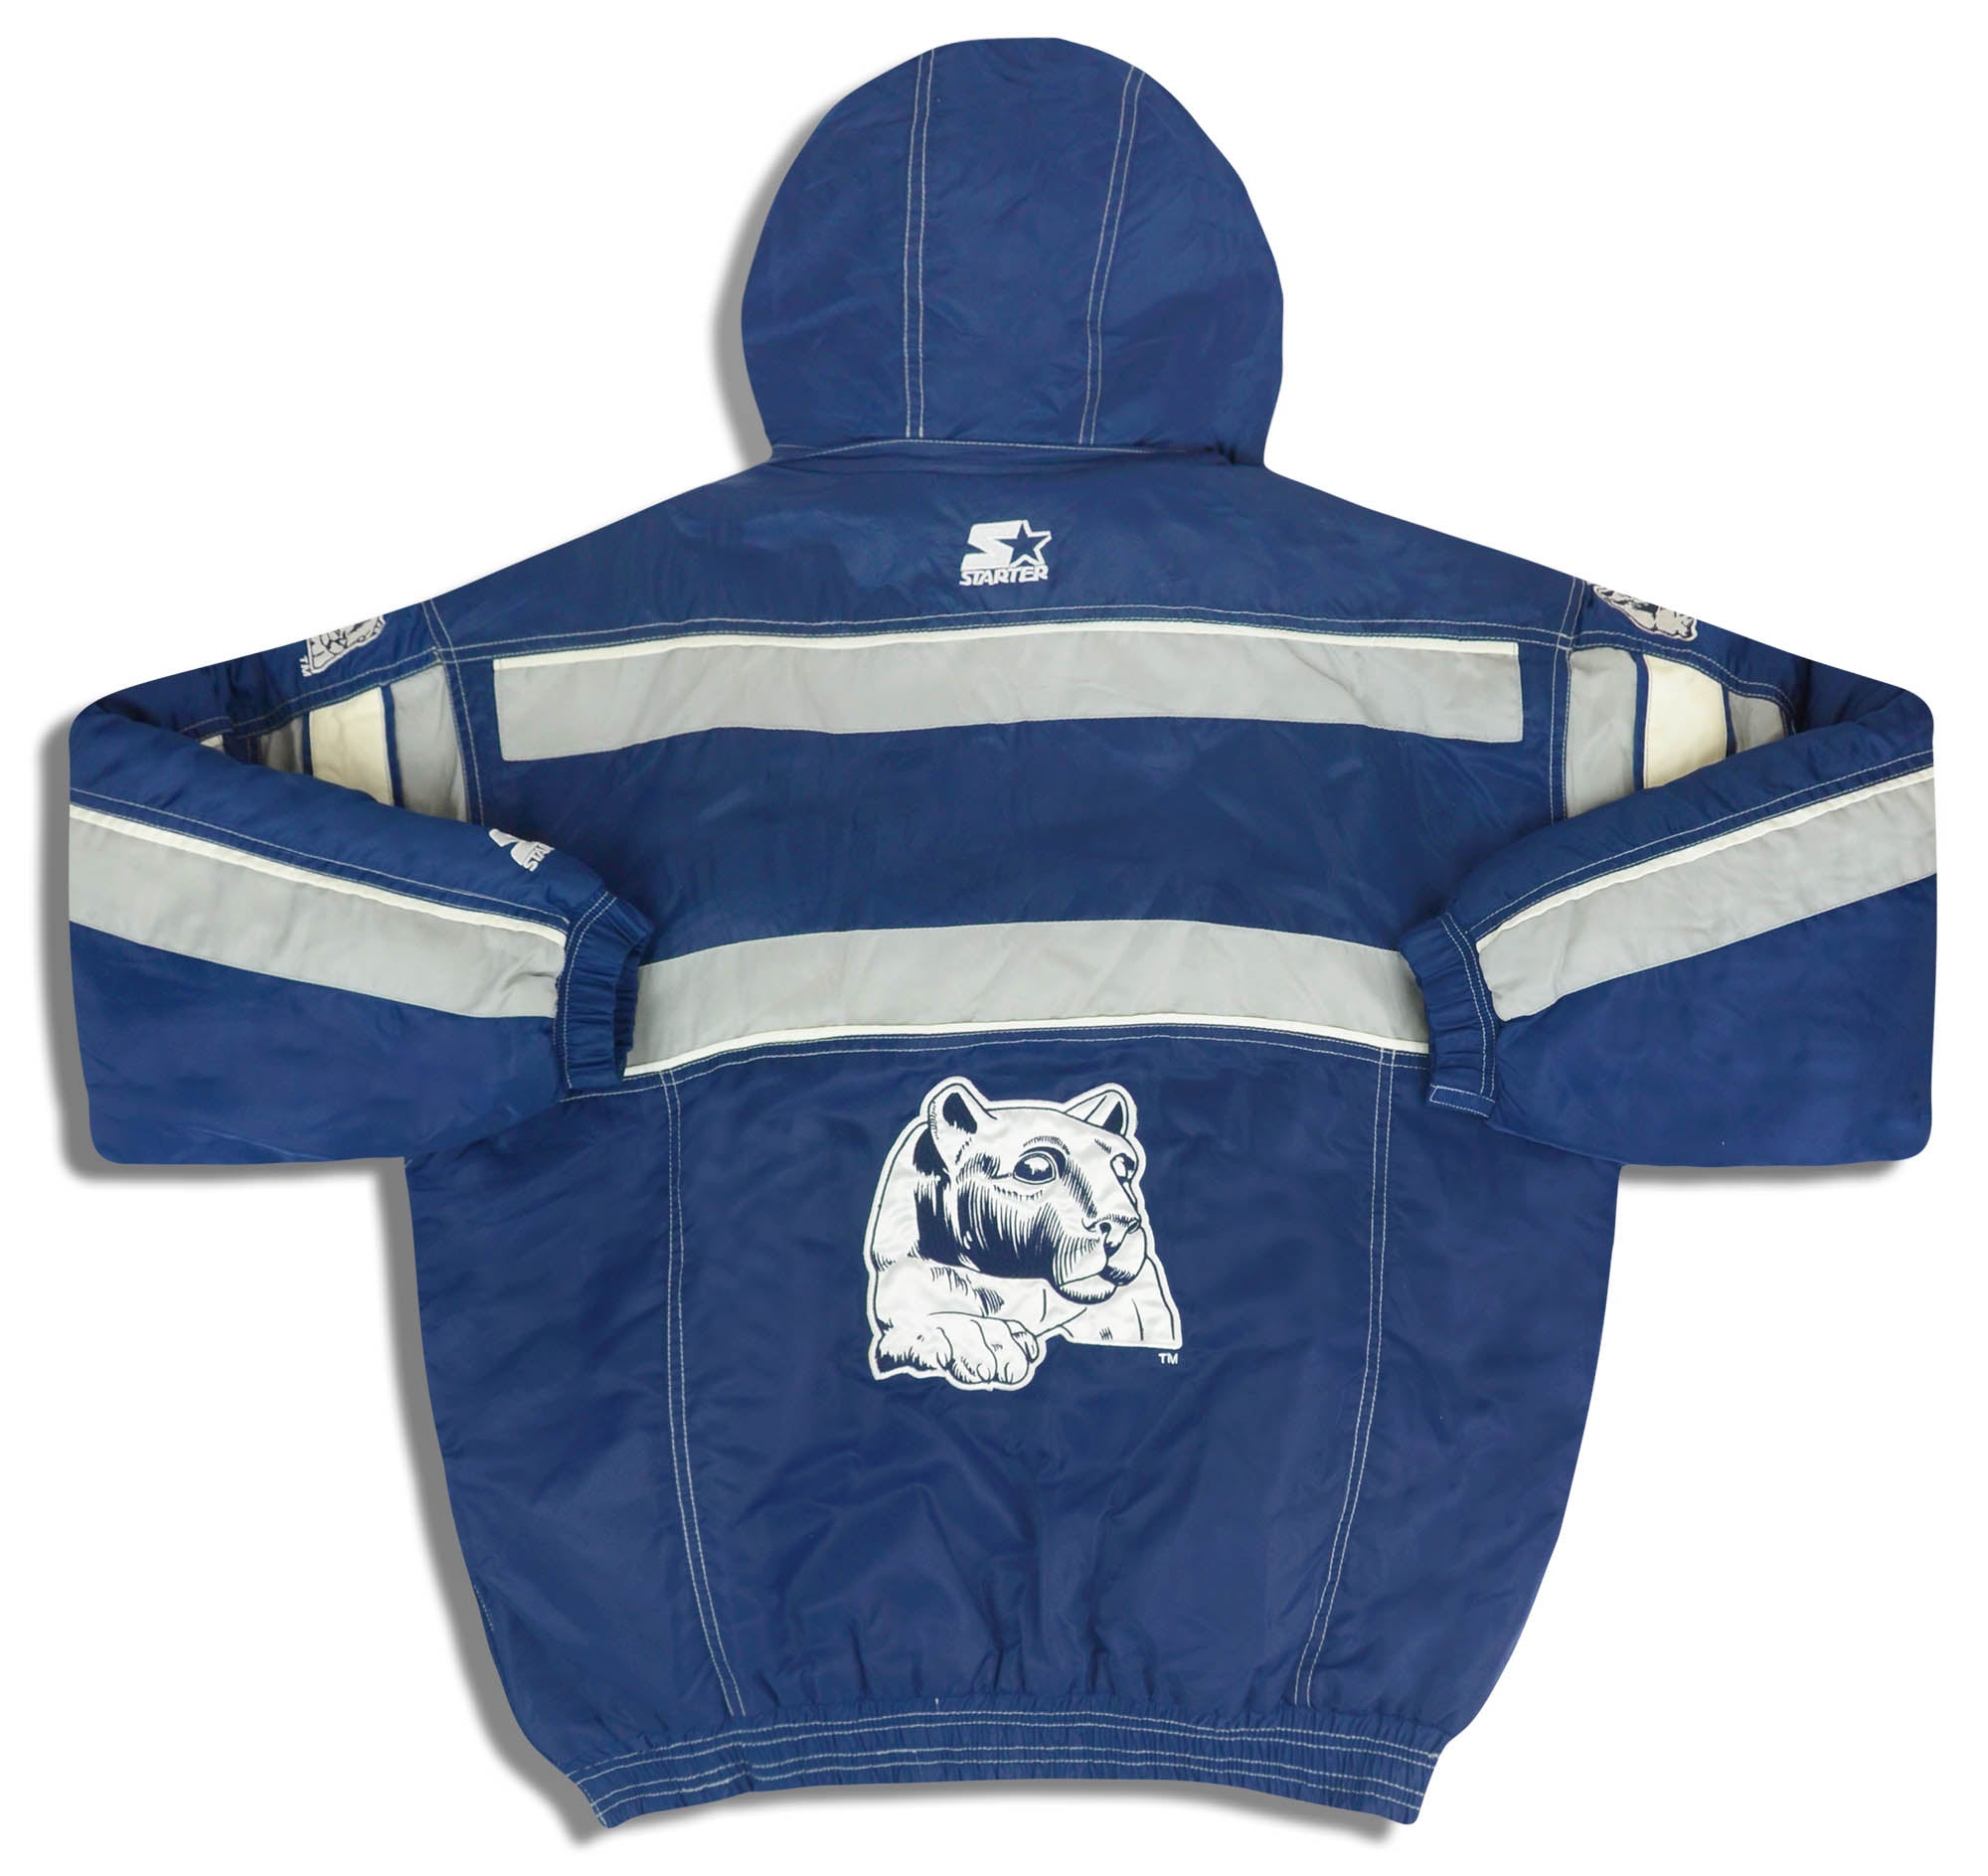 Vintage 90s Starter Kansas State pullover jacket XXL